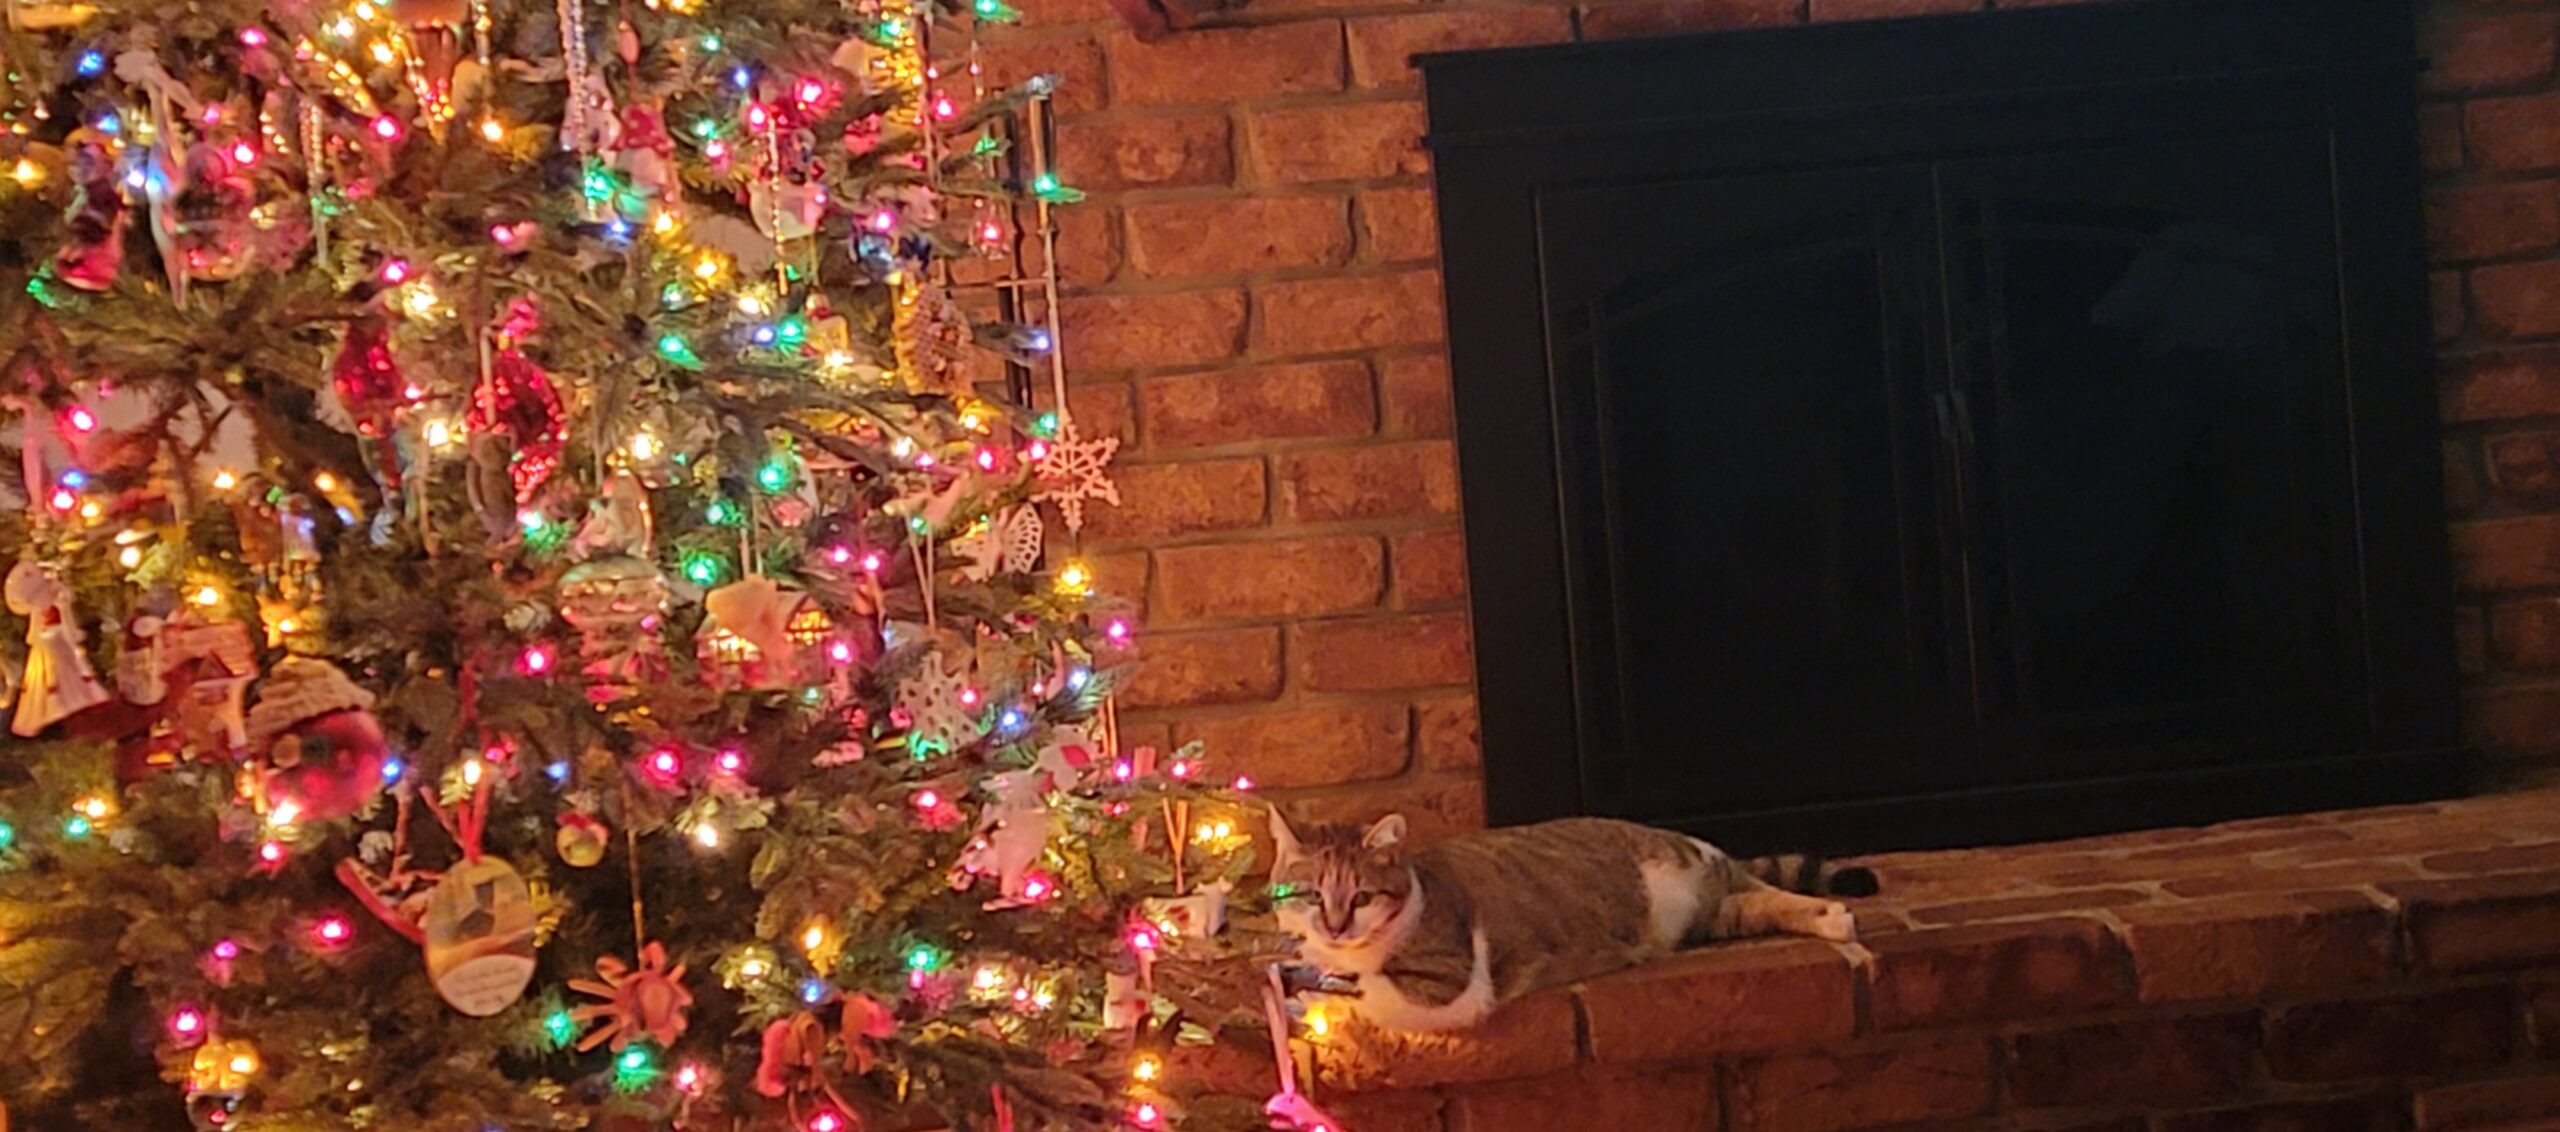 Stephanie's Cat Teddy by Christmas tree